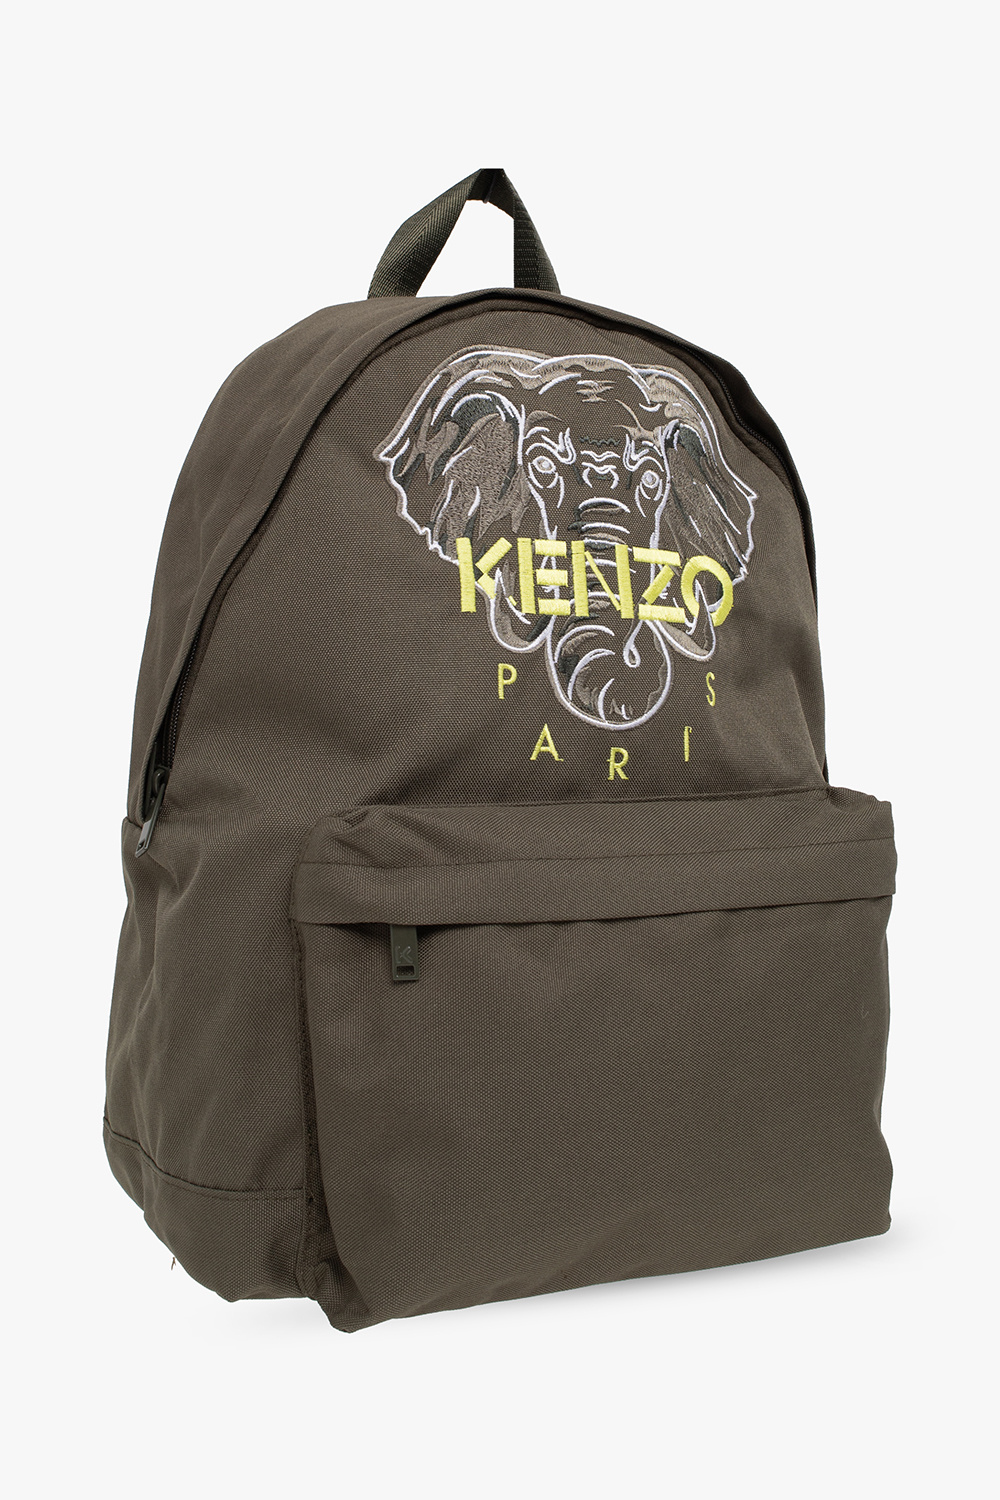 Kenzo Kids tote bag burberry bag black